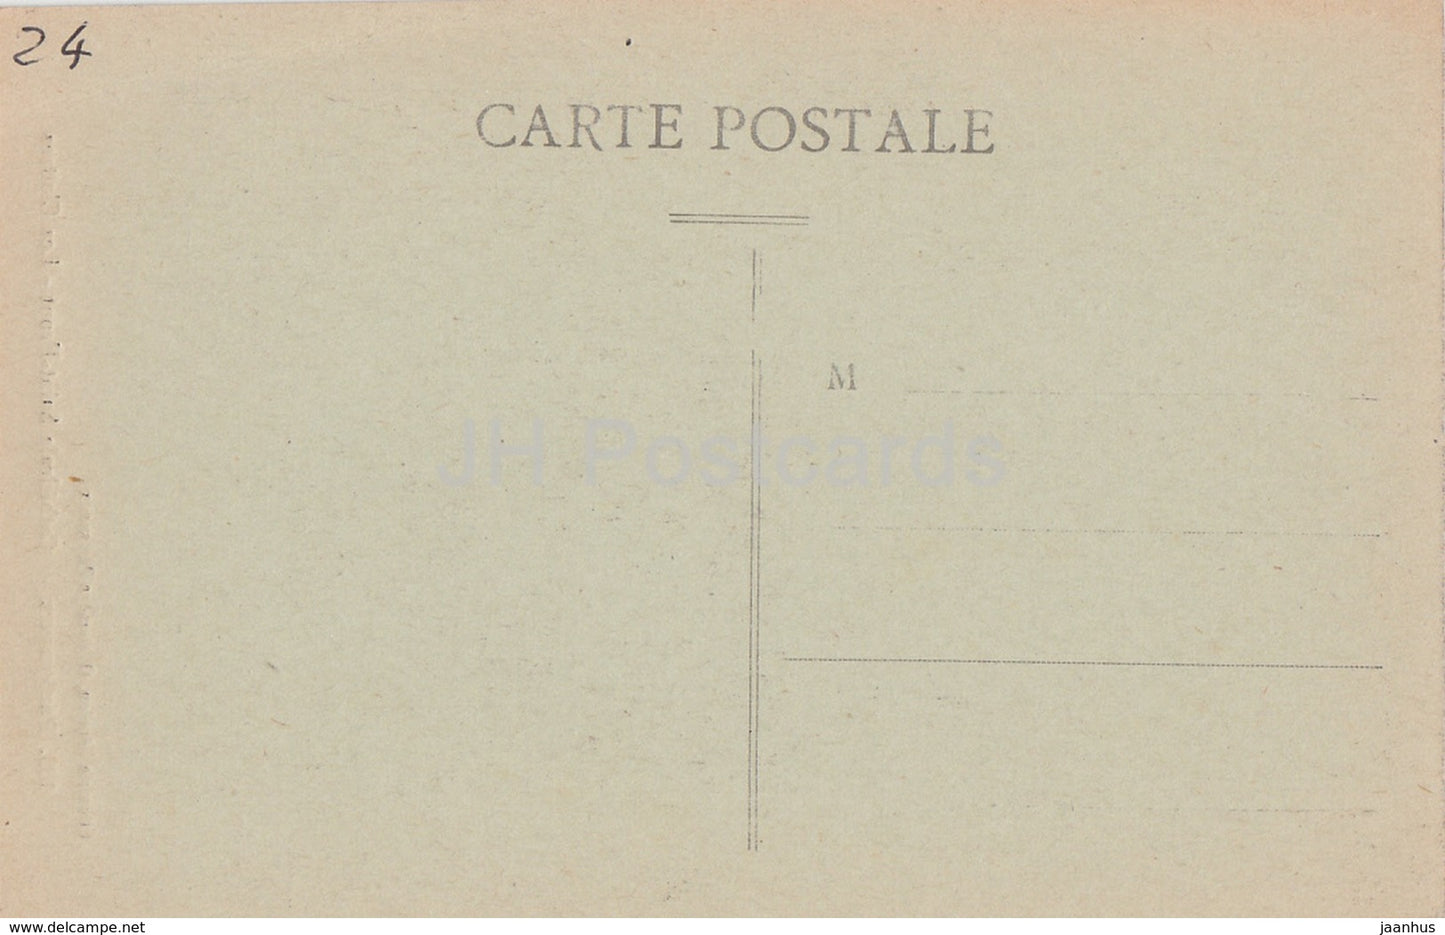 Perigueux - Cathedrale St Front - Les Cloitres - Kathedrale - 139 - alte Postkarte - Frankreich - unbenutzt